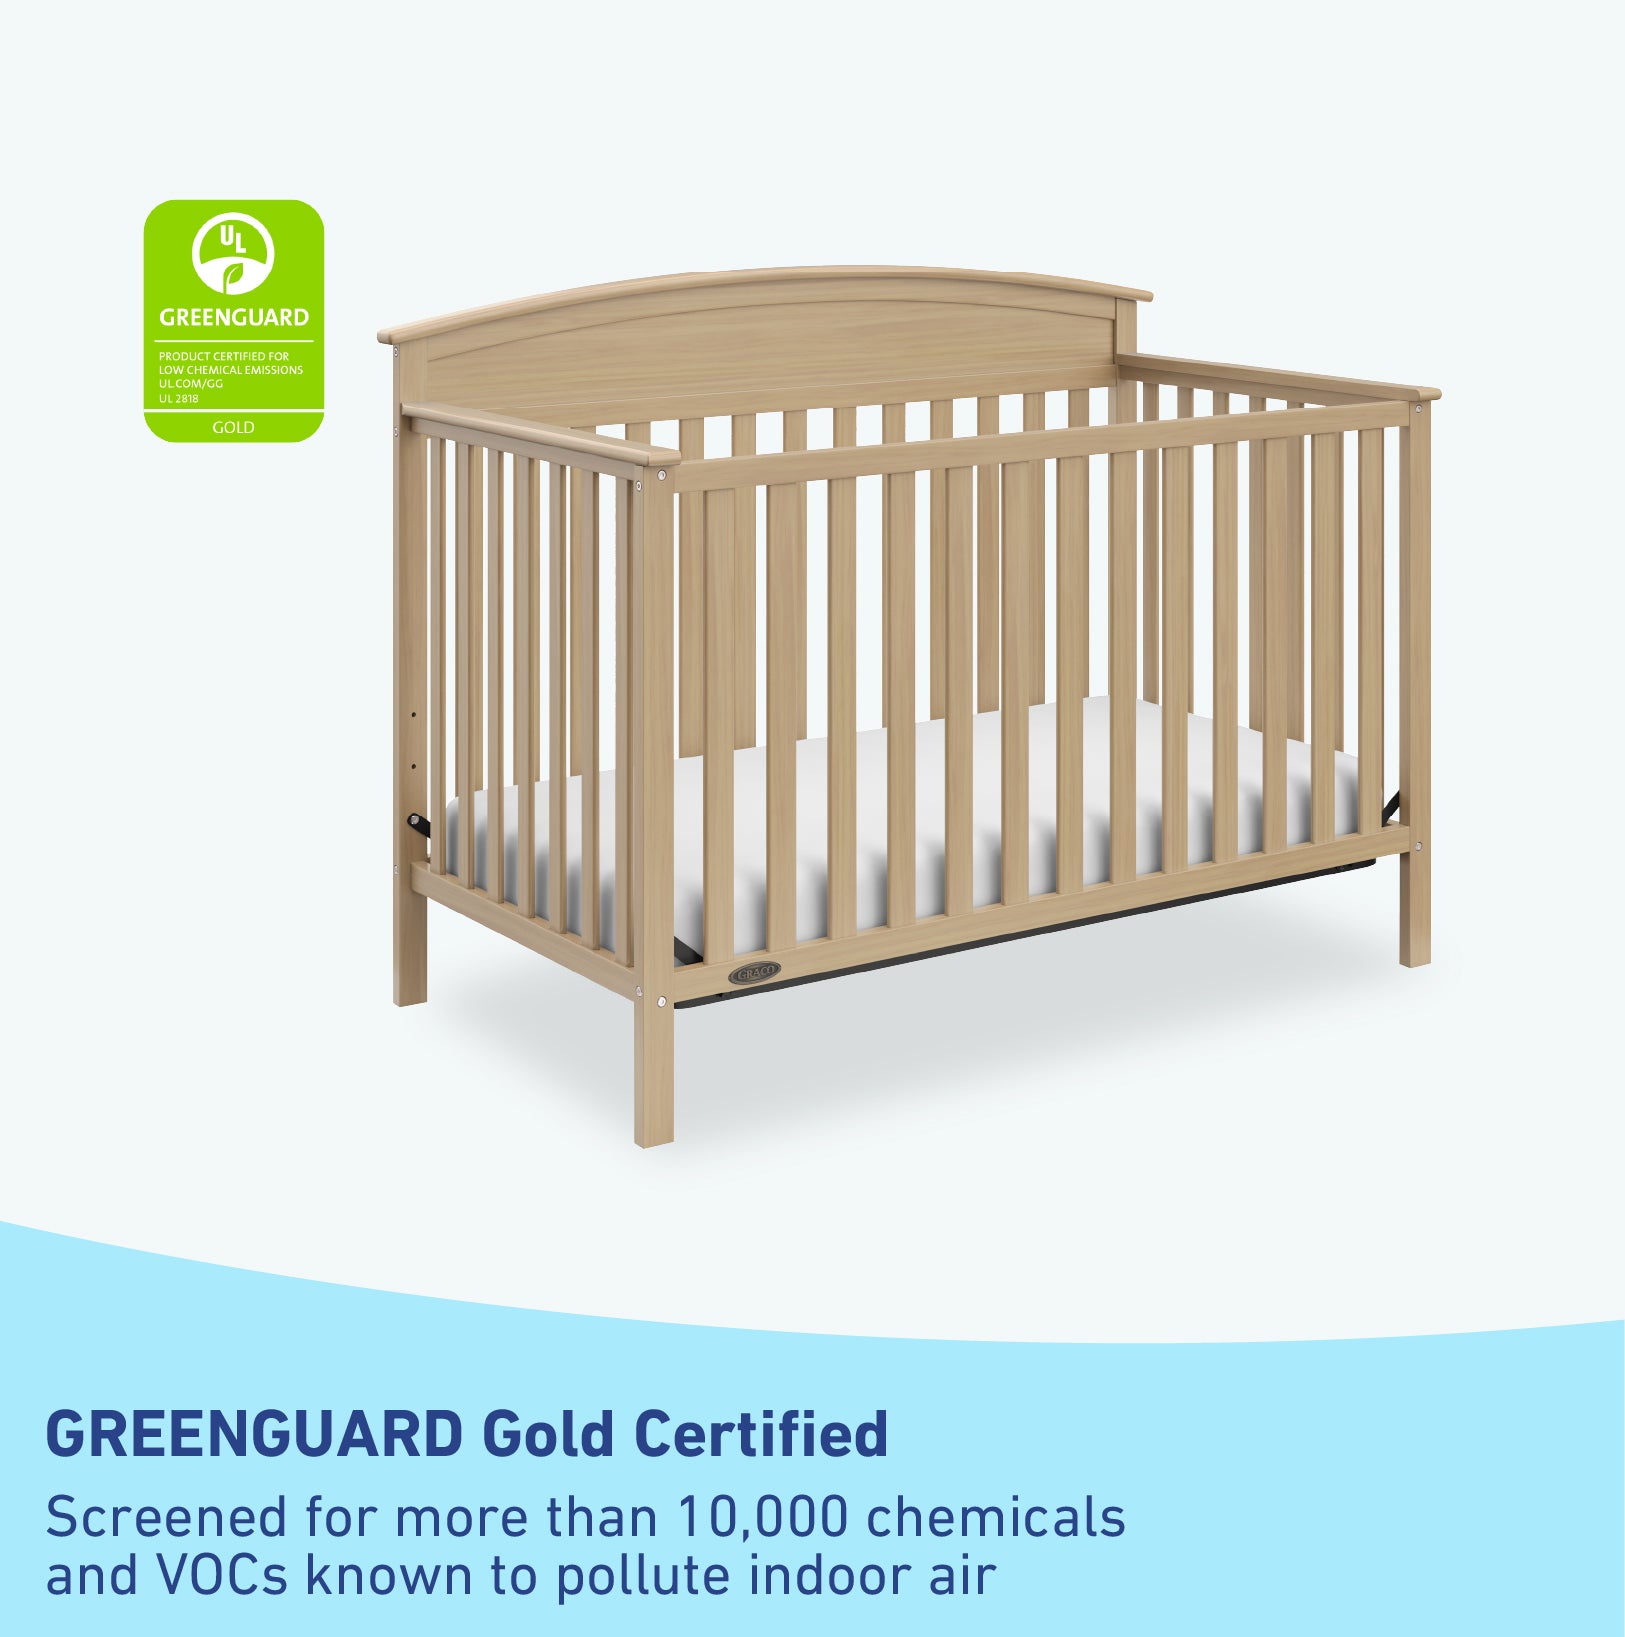 GREENGUARD Gold Certified driftwood crib 